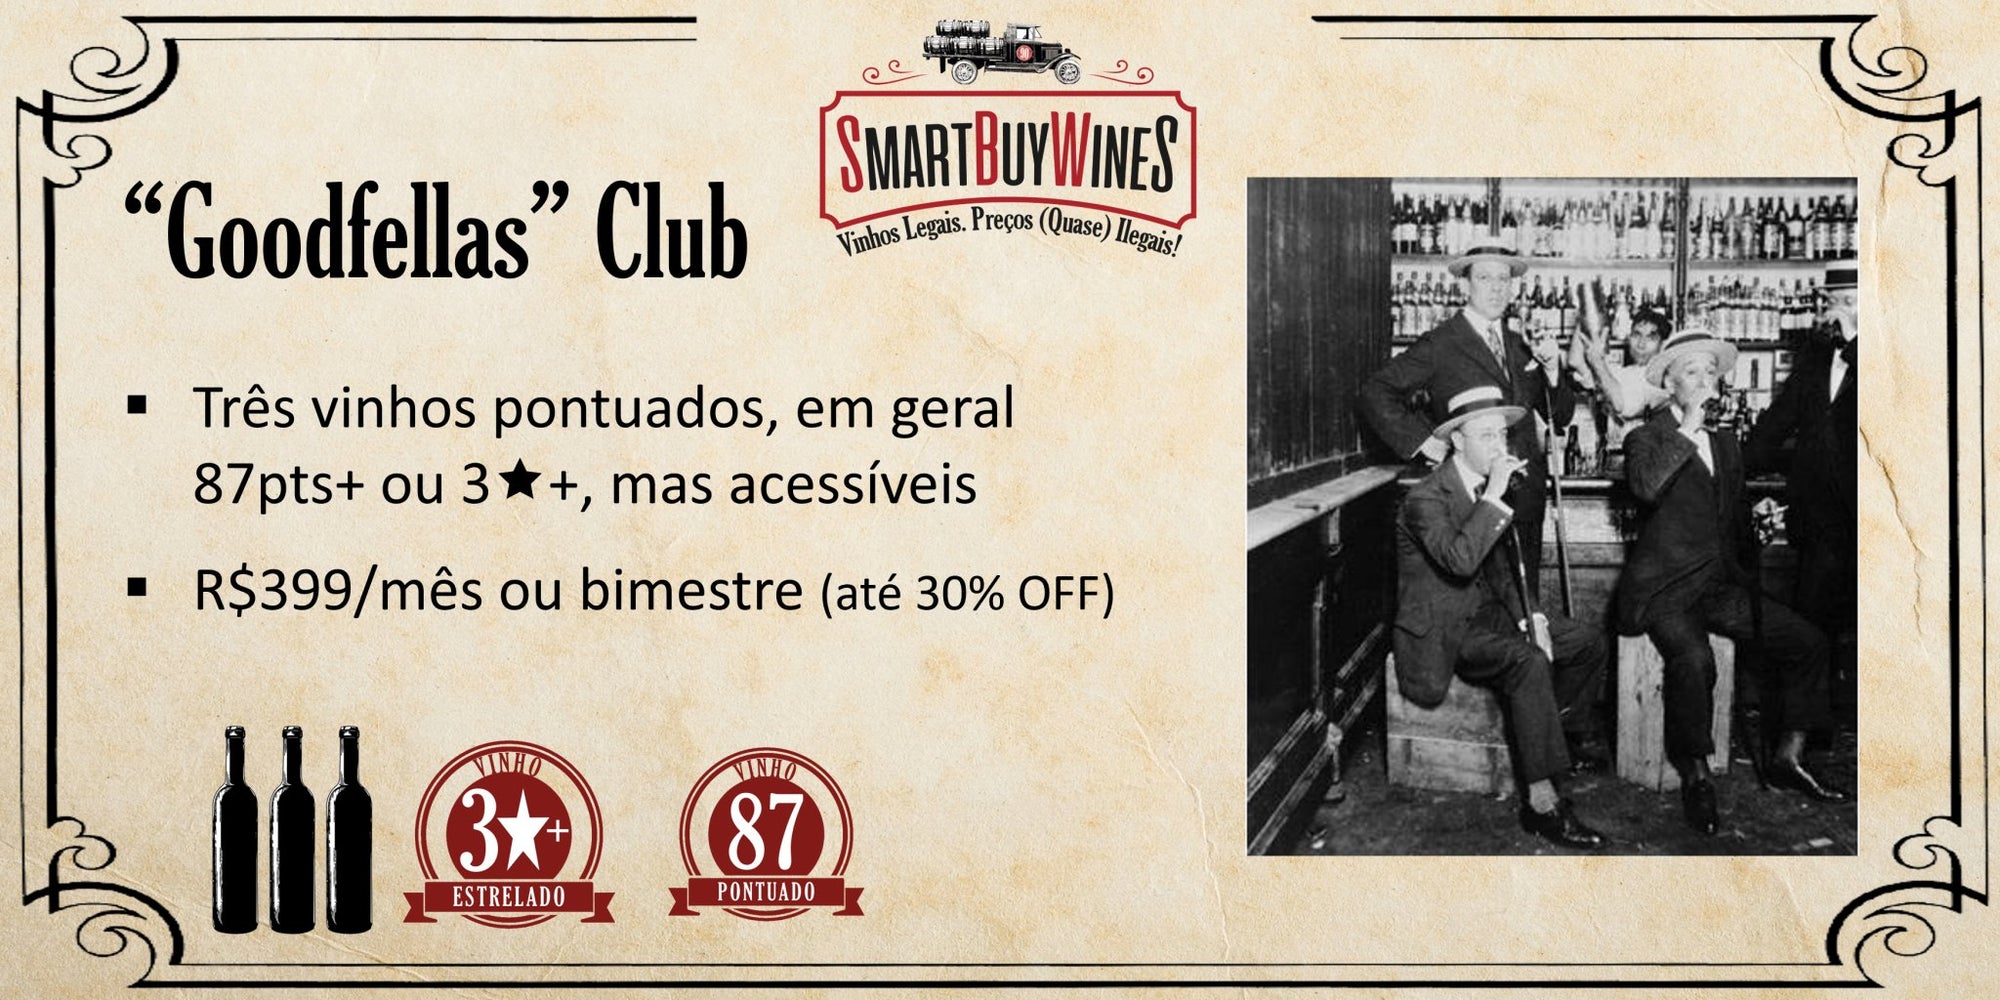 CLUBE GOODFELLAS - SmartBuyWines.com.br